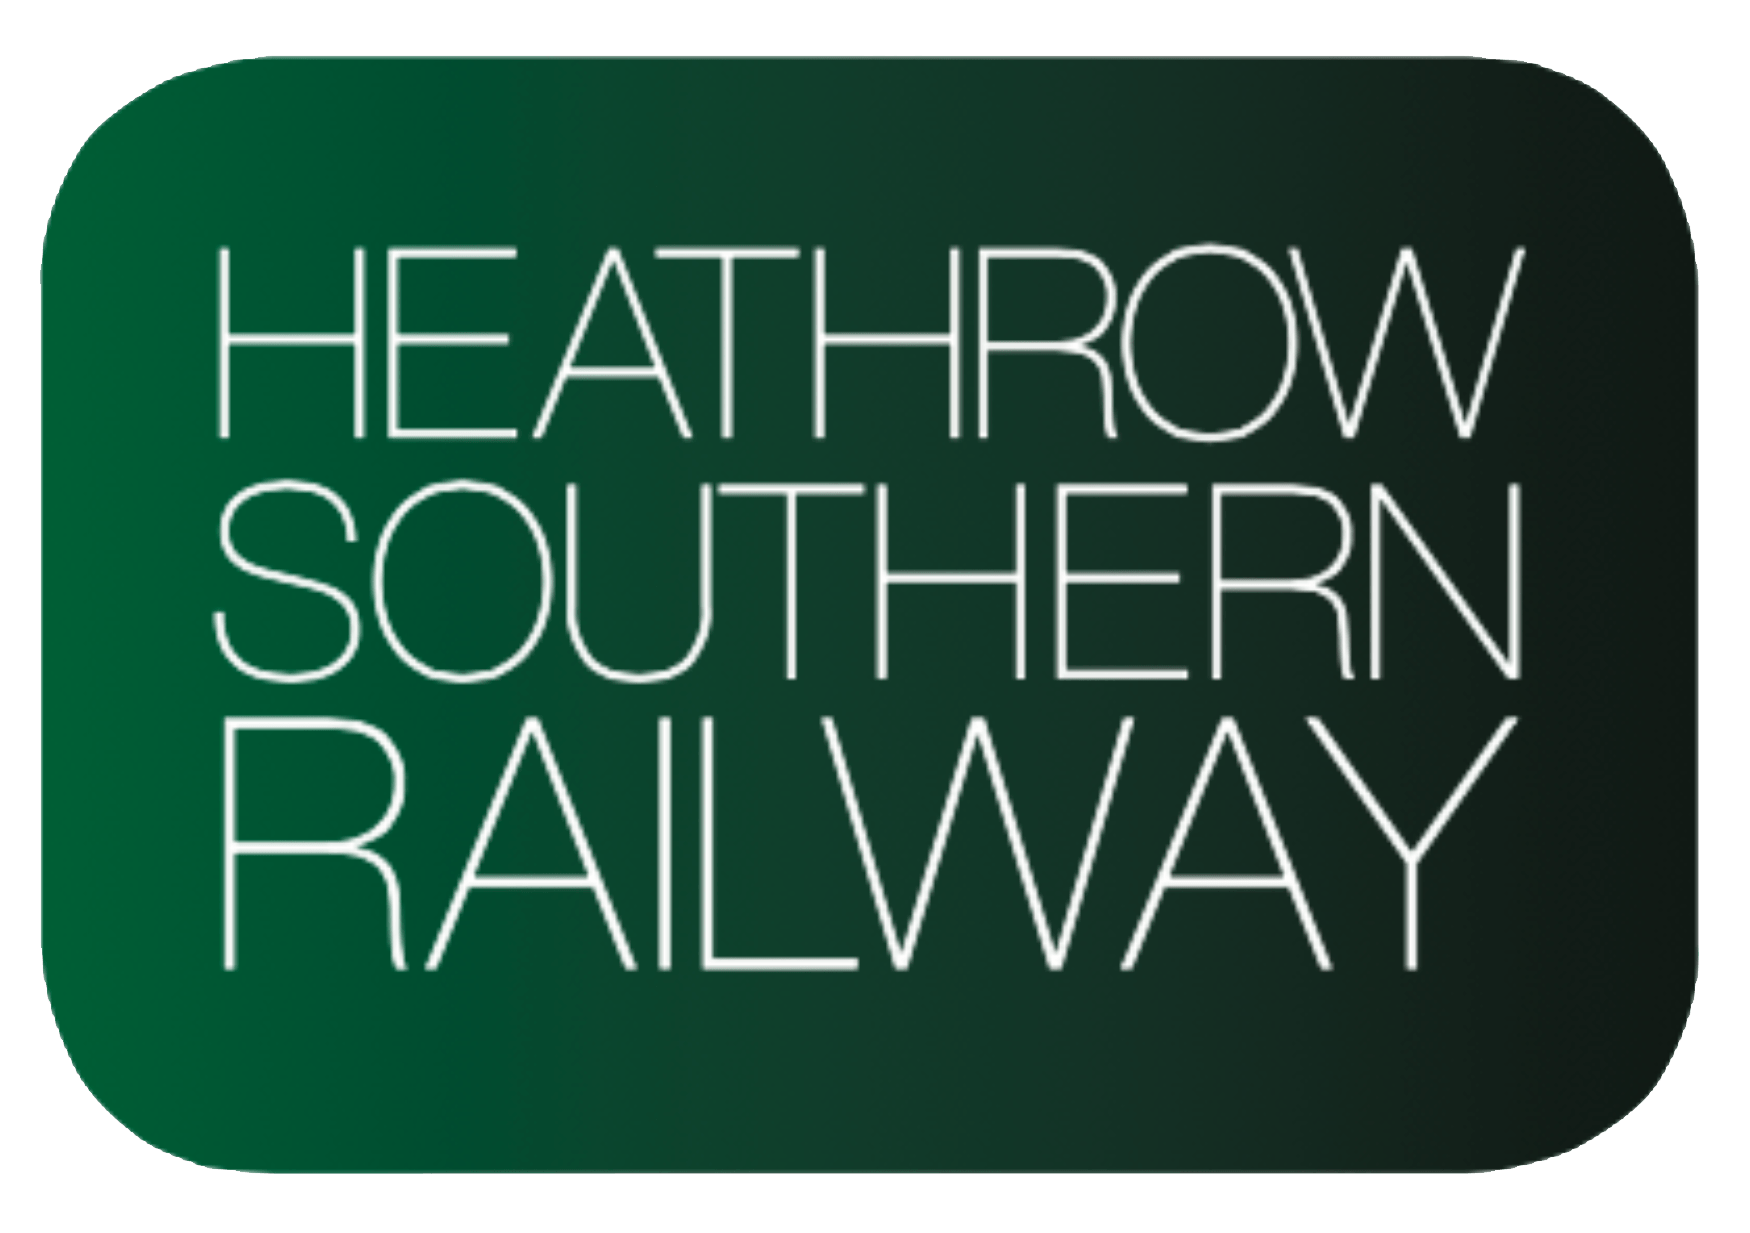 Southern Railway Logo - Home - Heathrow Southern Railway